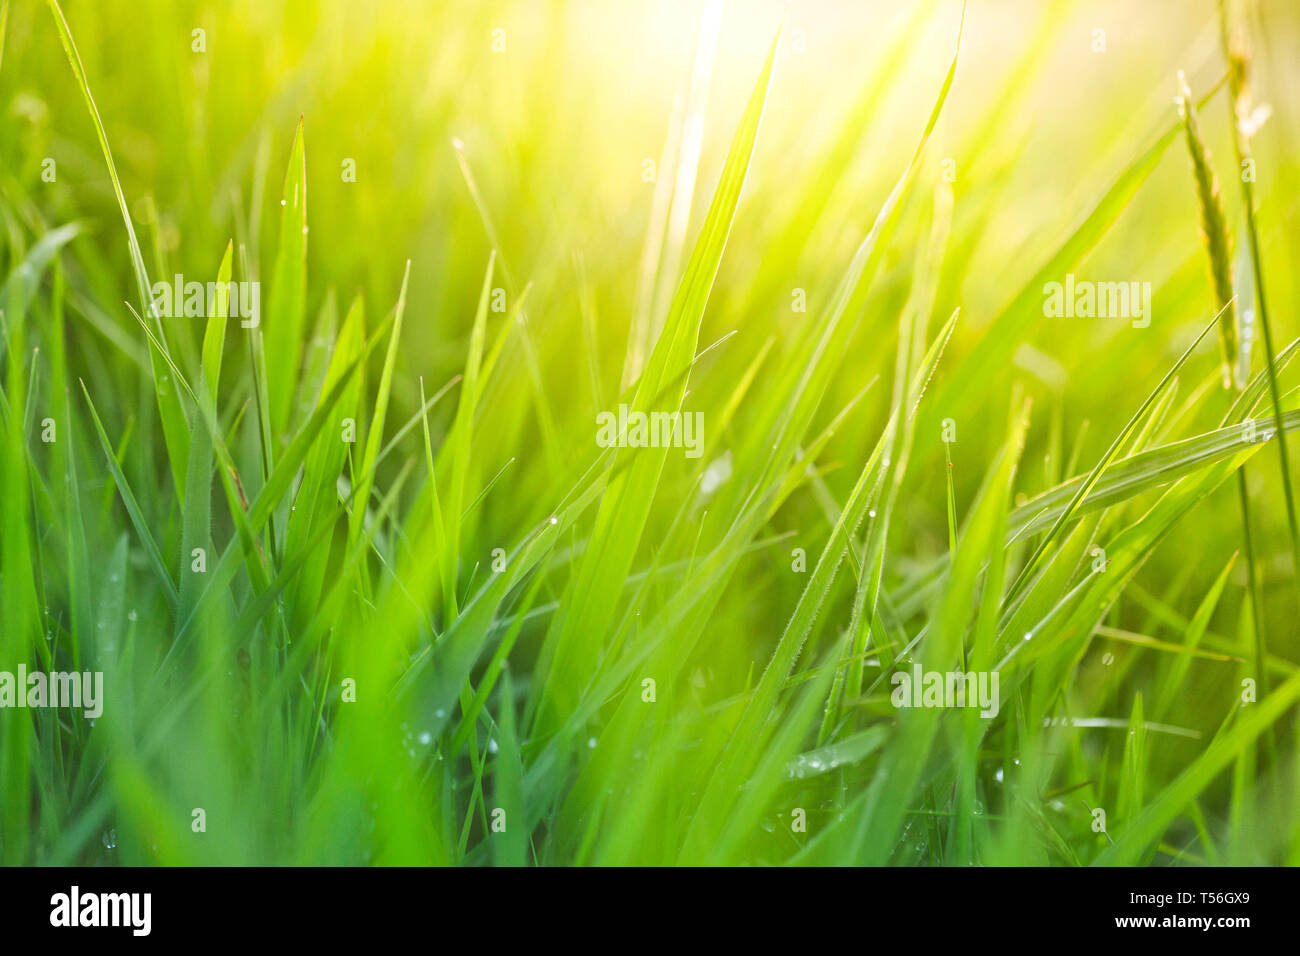 Lush, fresh green grass background Stock Photo - Alamy